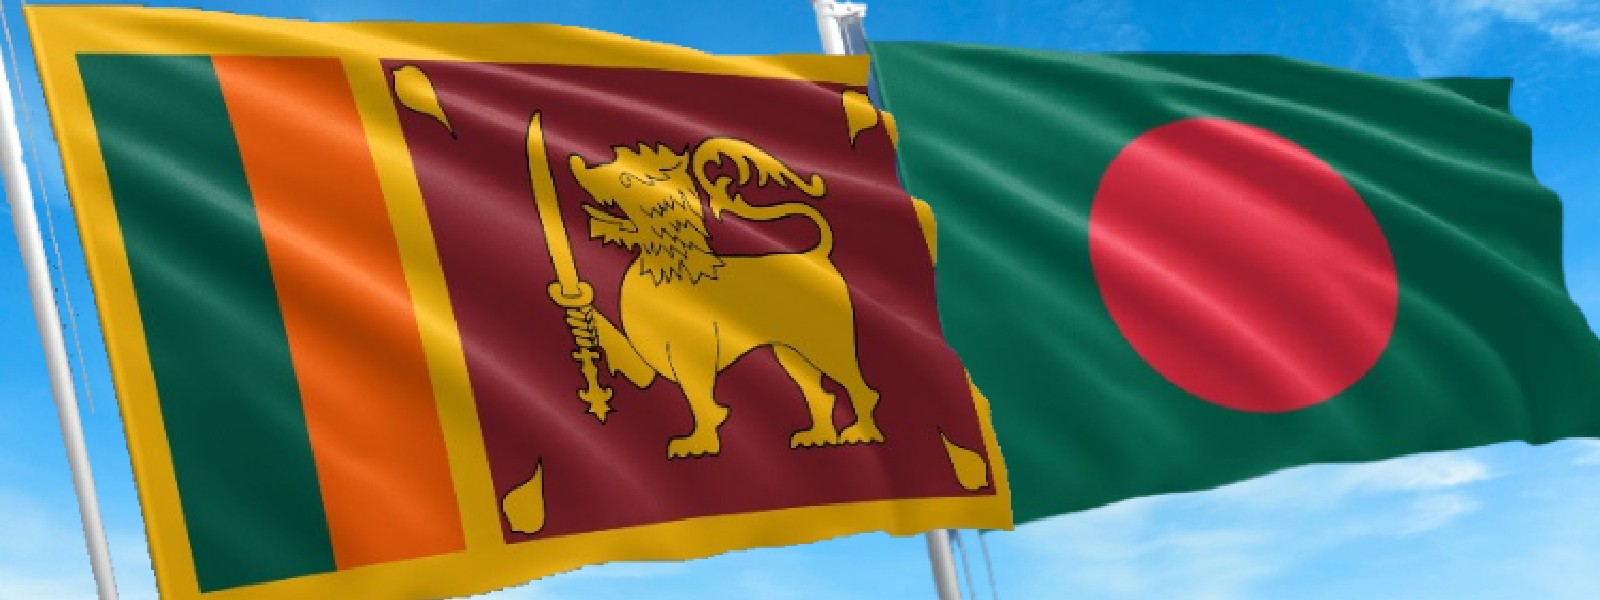 Sri Lanka repays $50m to Bangladesh